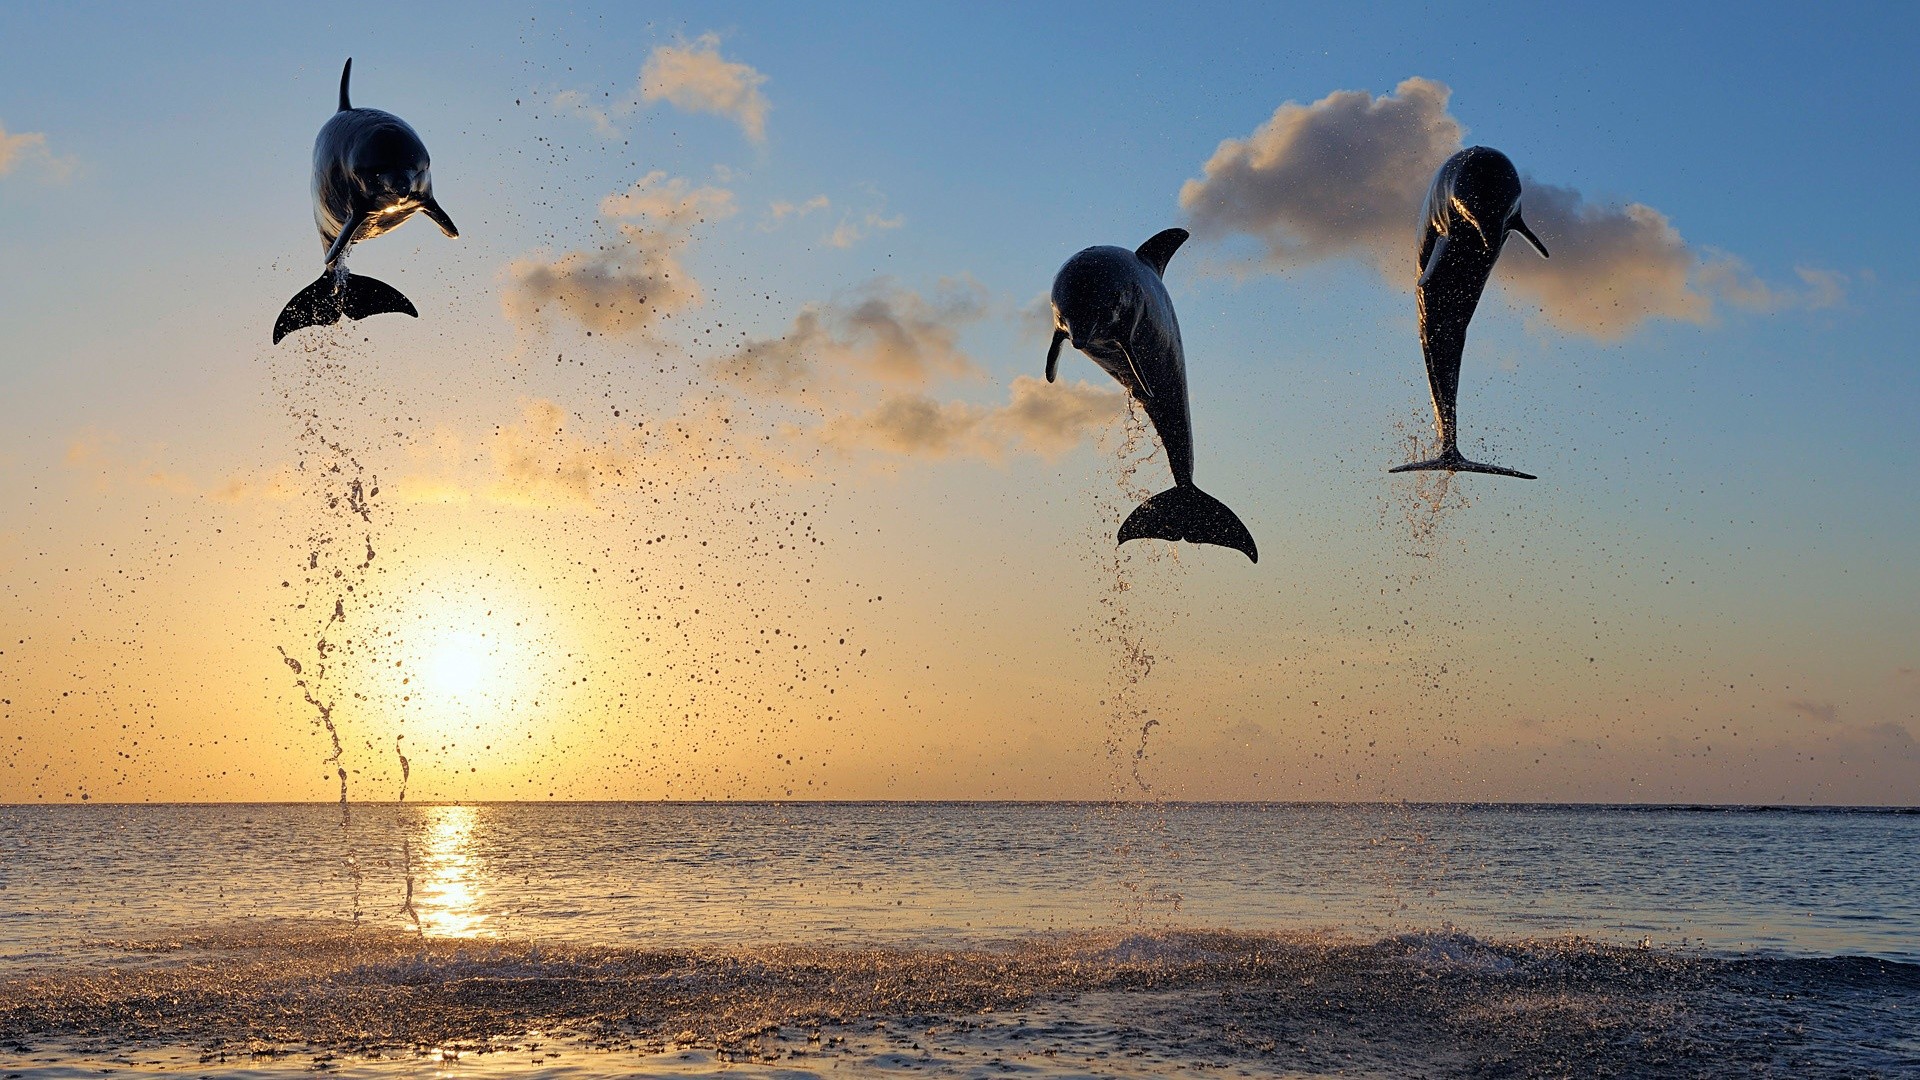 Jumping დელფინები